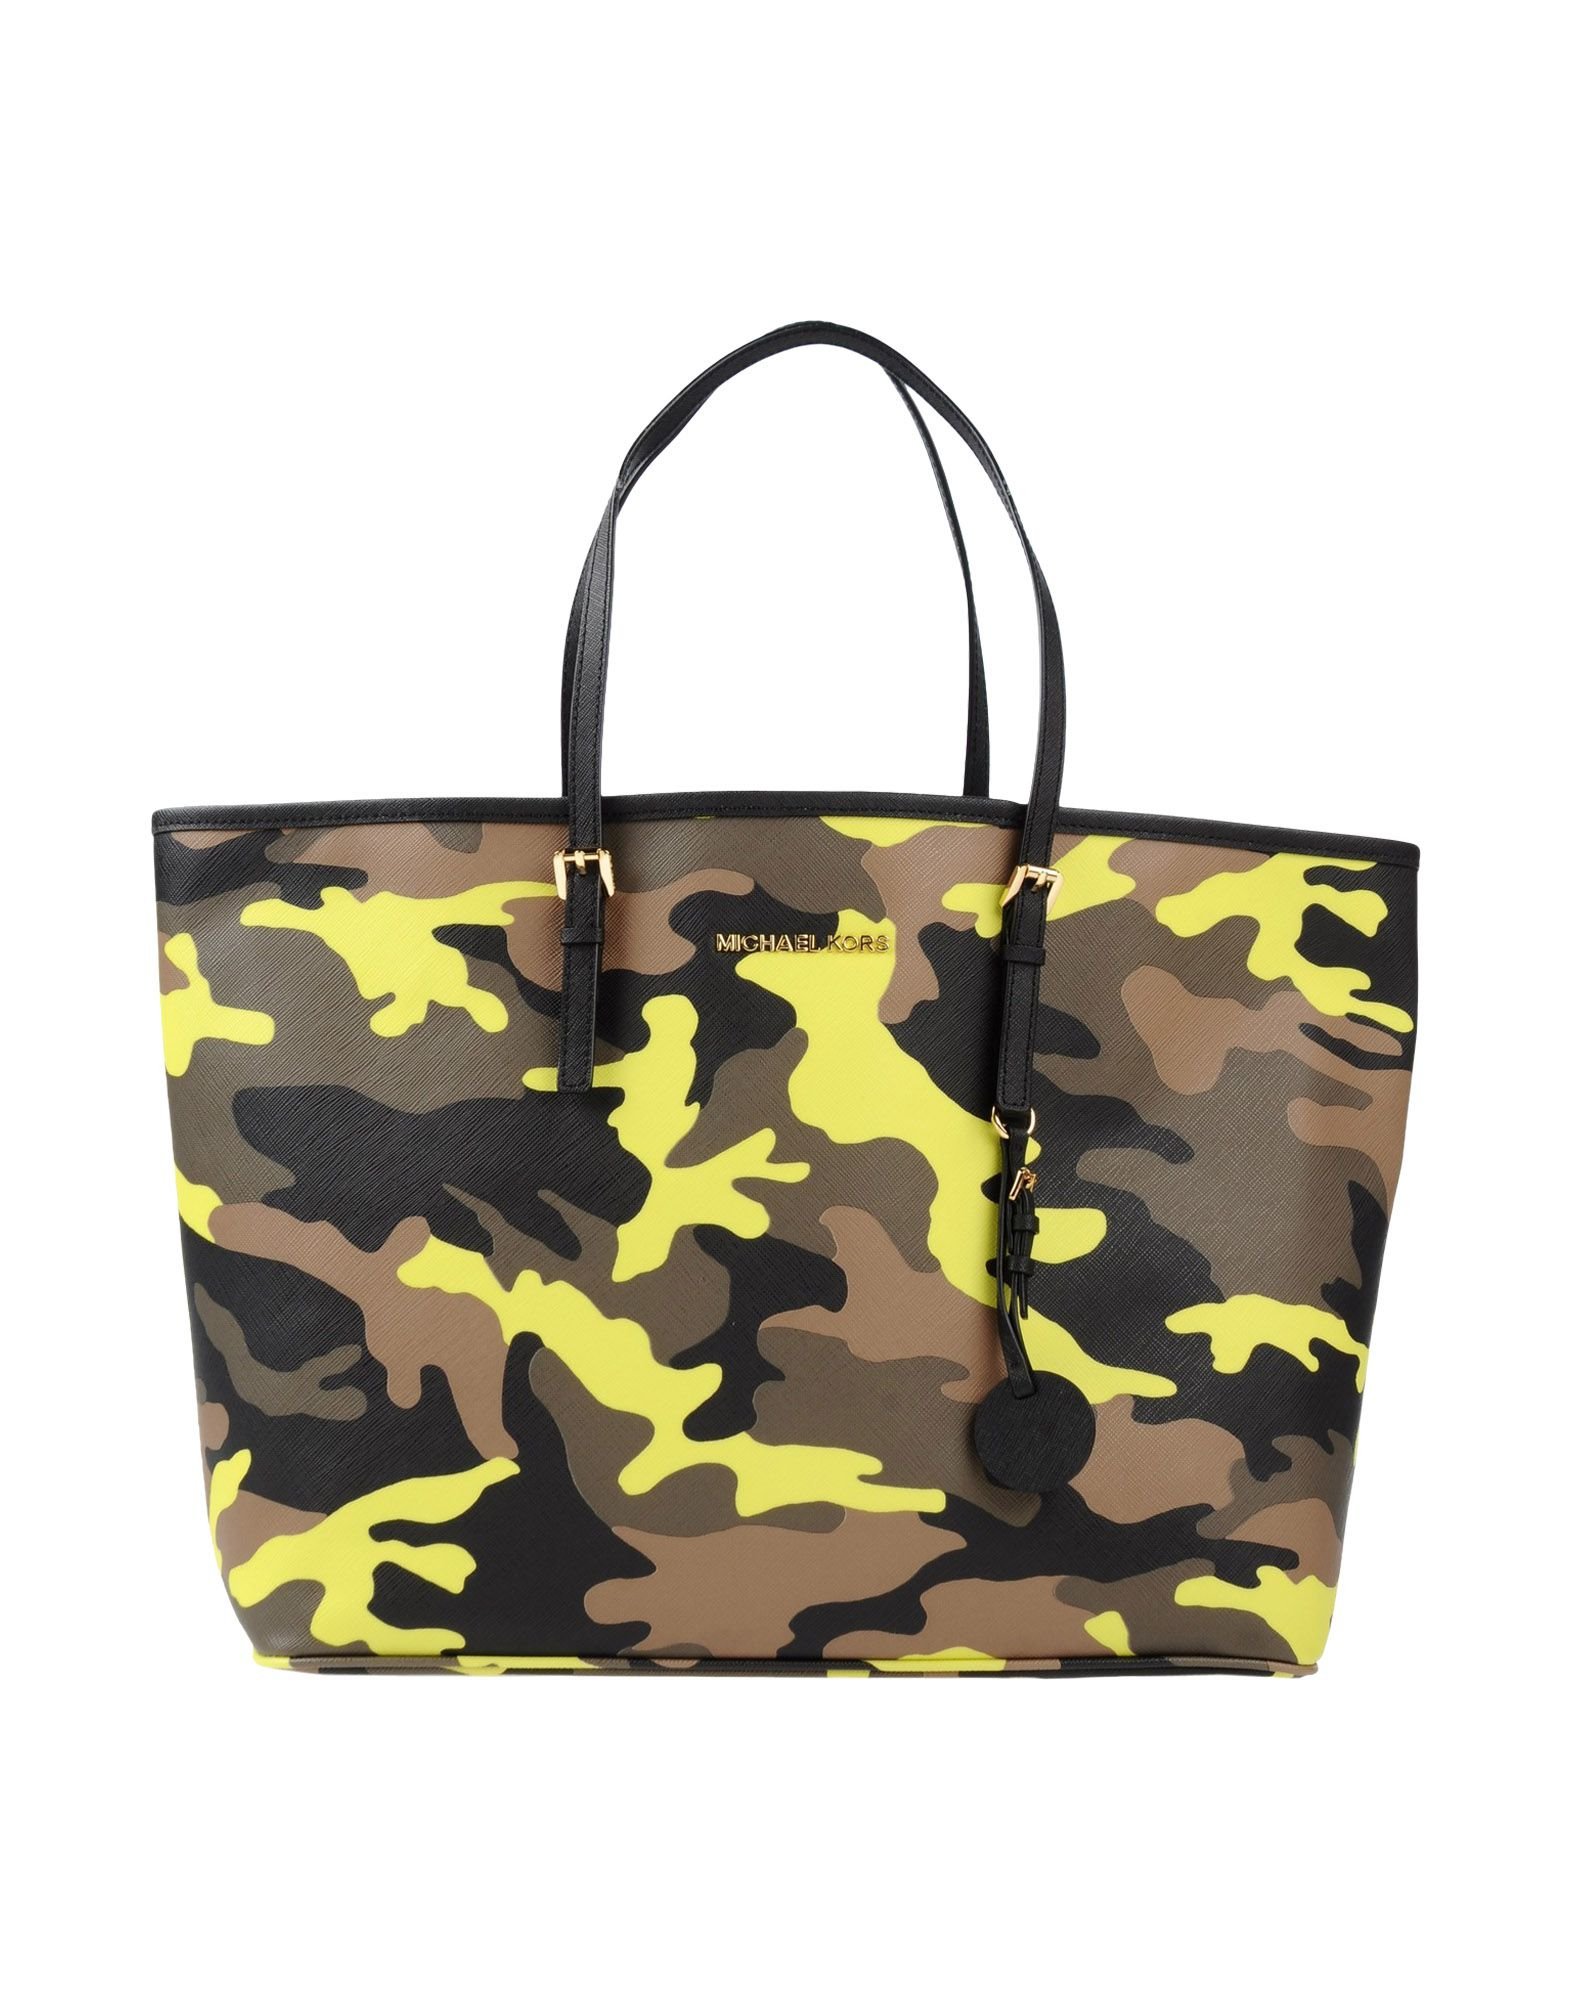 michael kors camouflage handbags